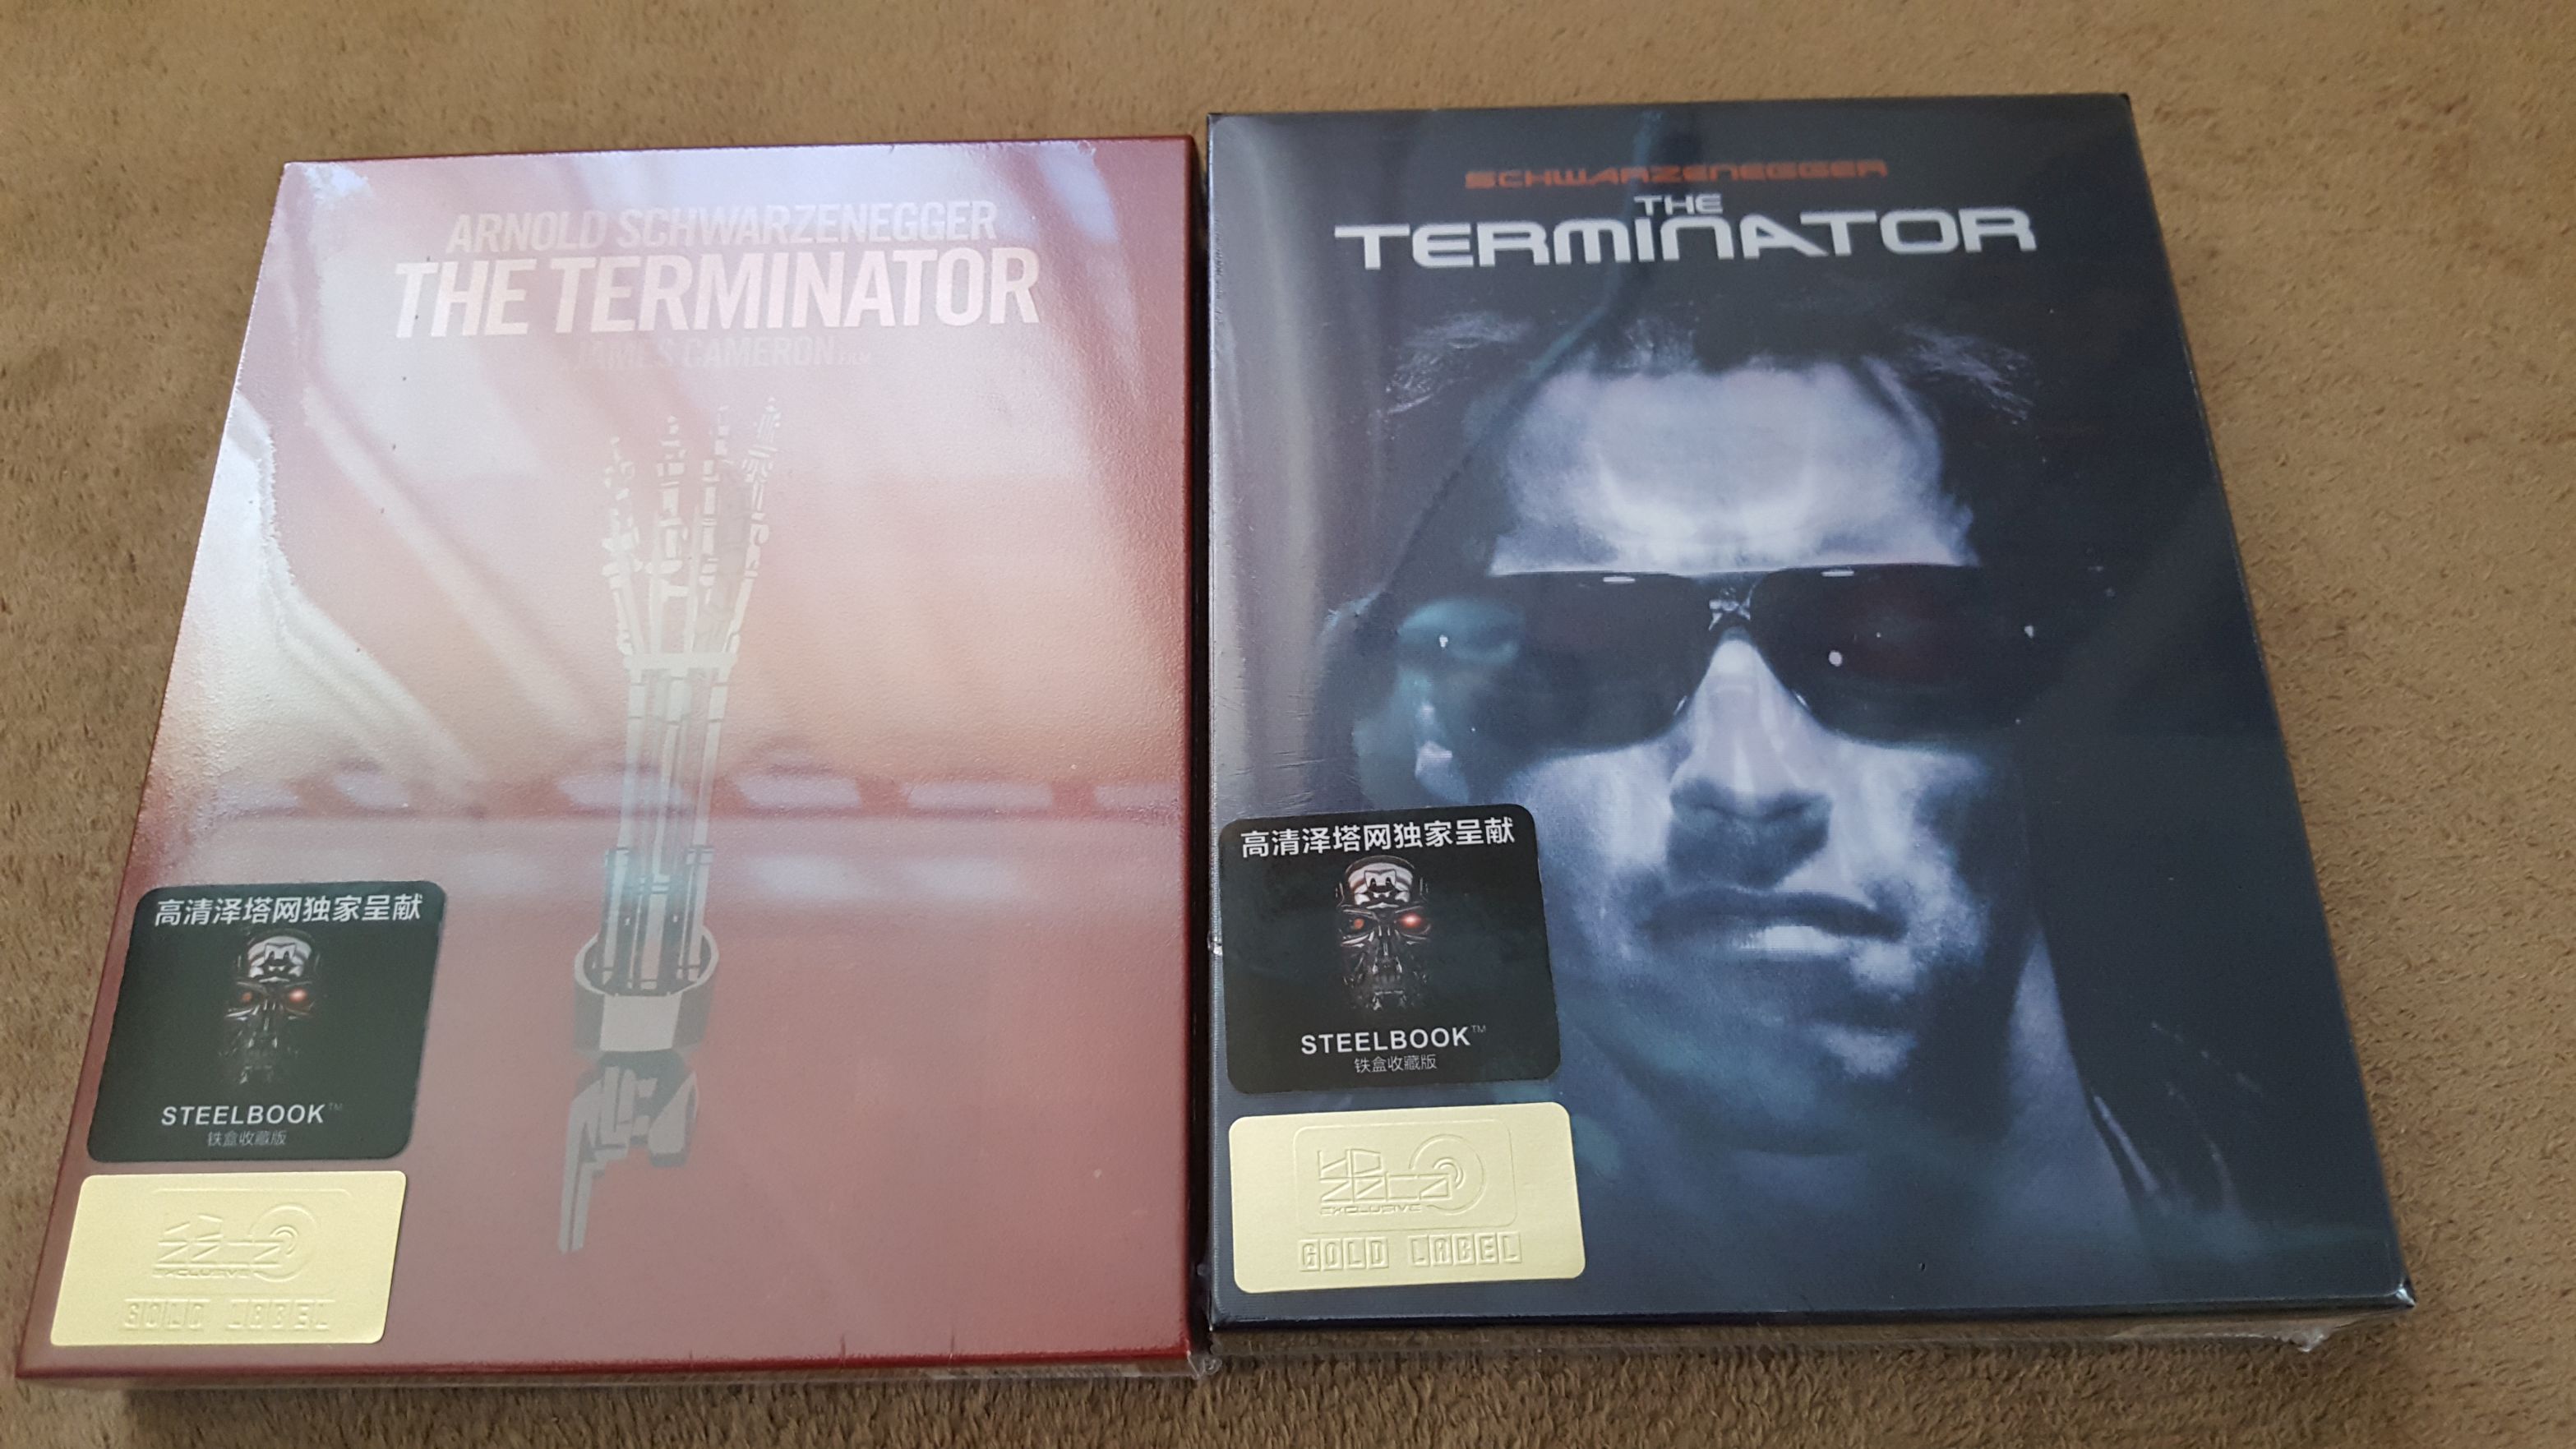 Terminator HDZeta komplett.jpg